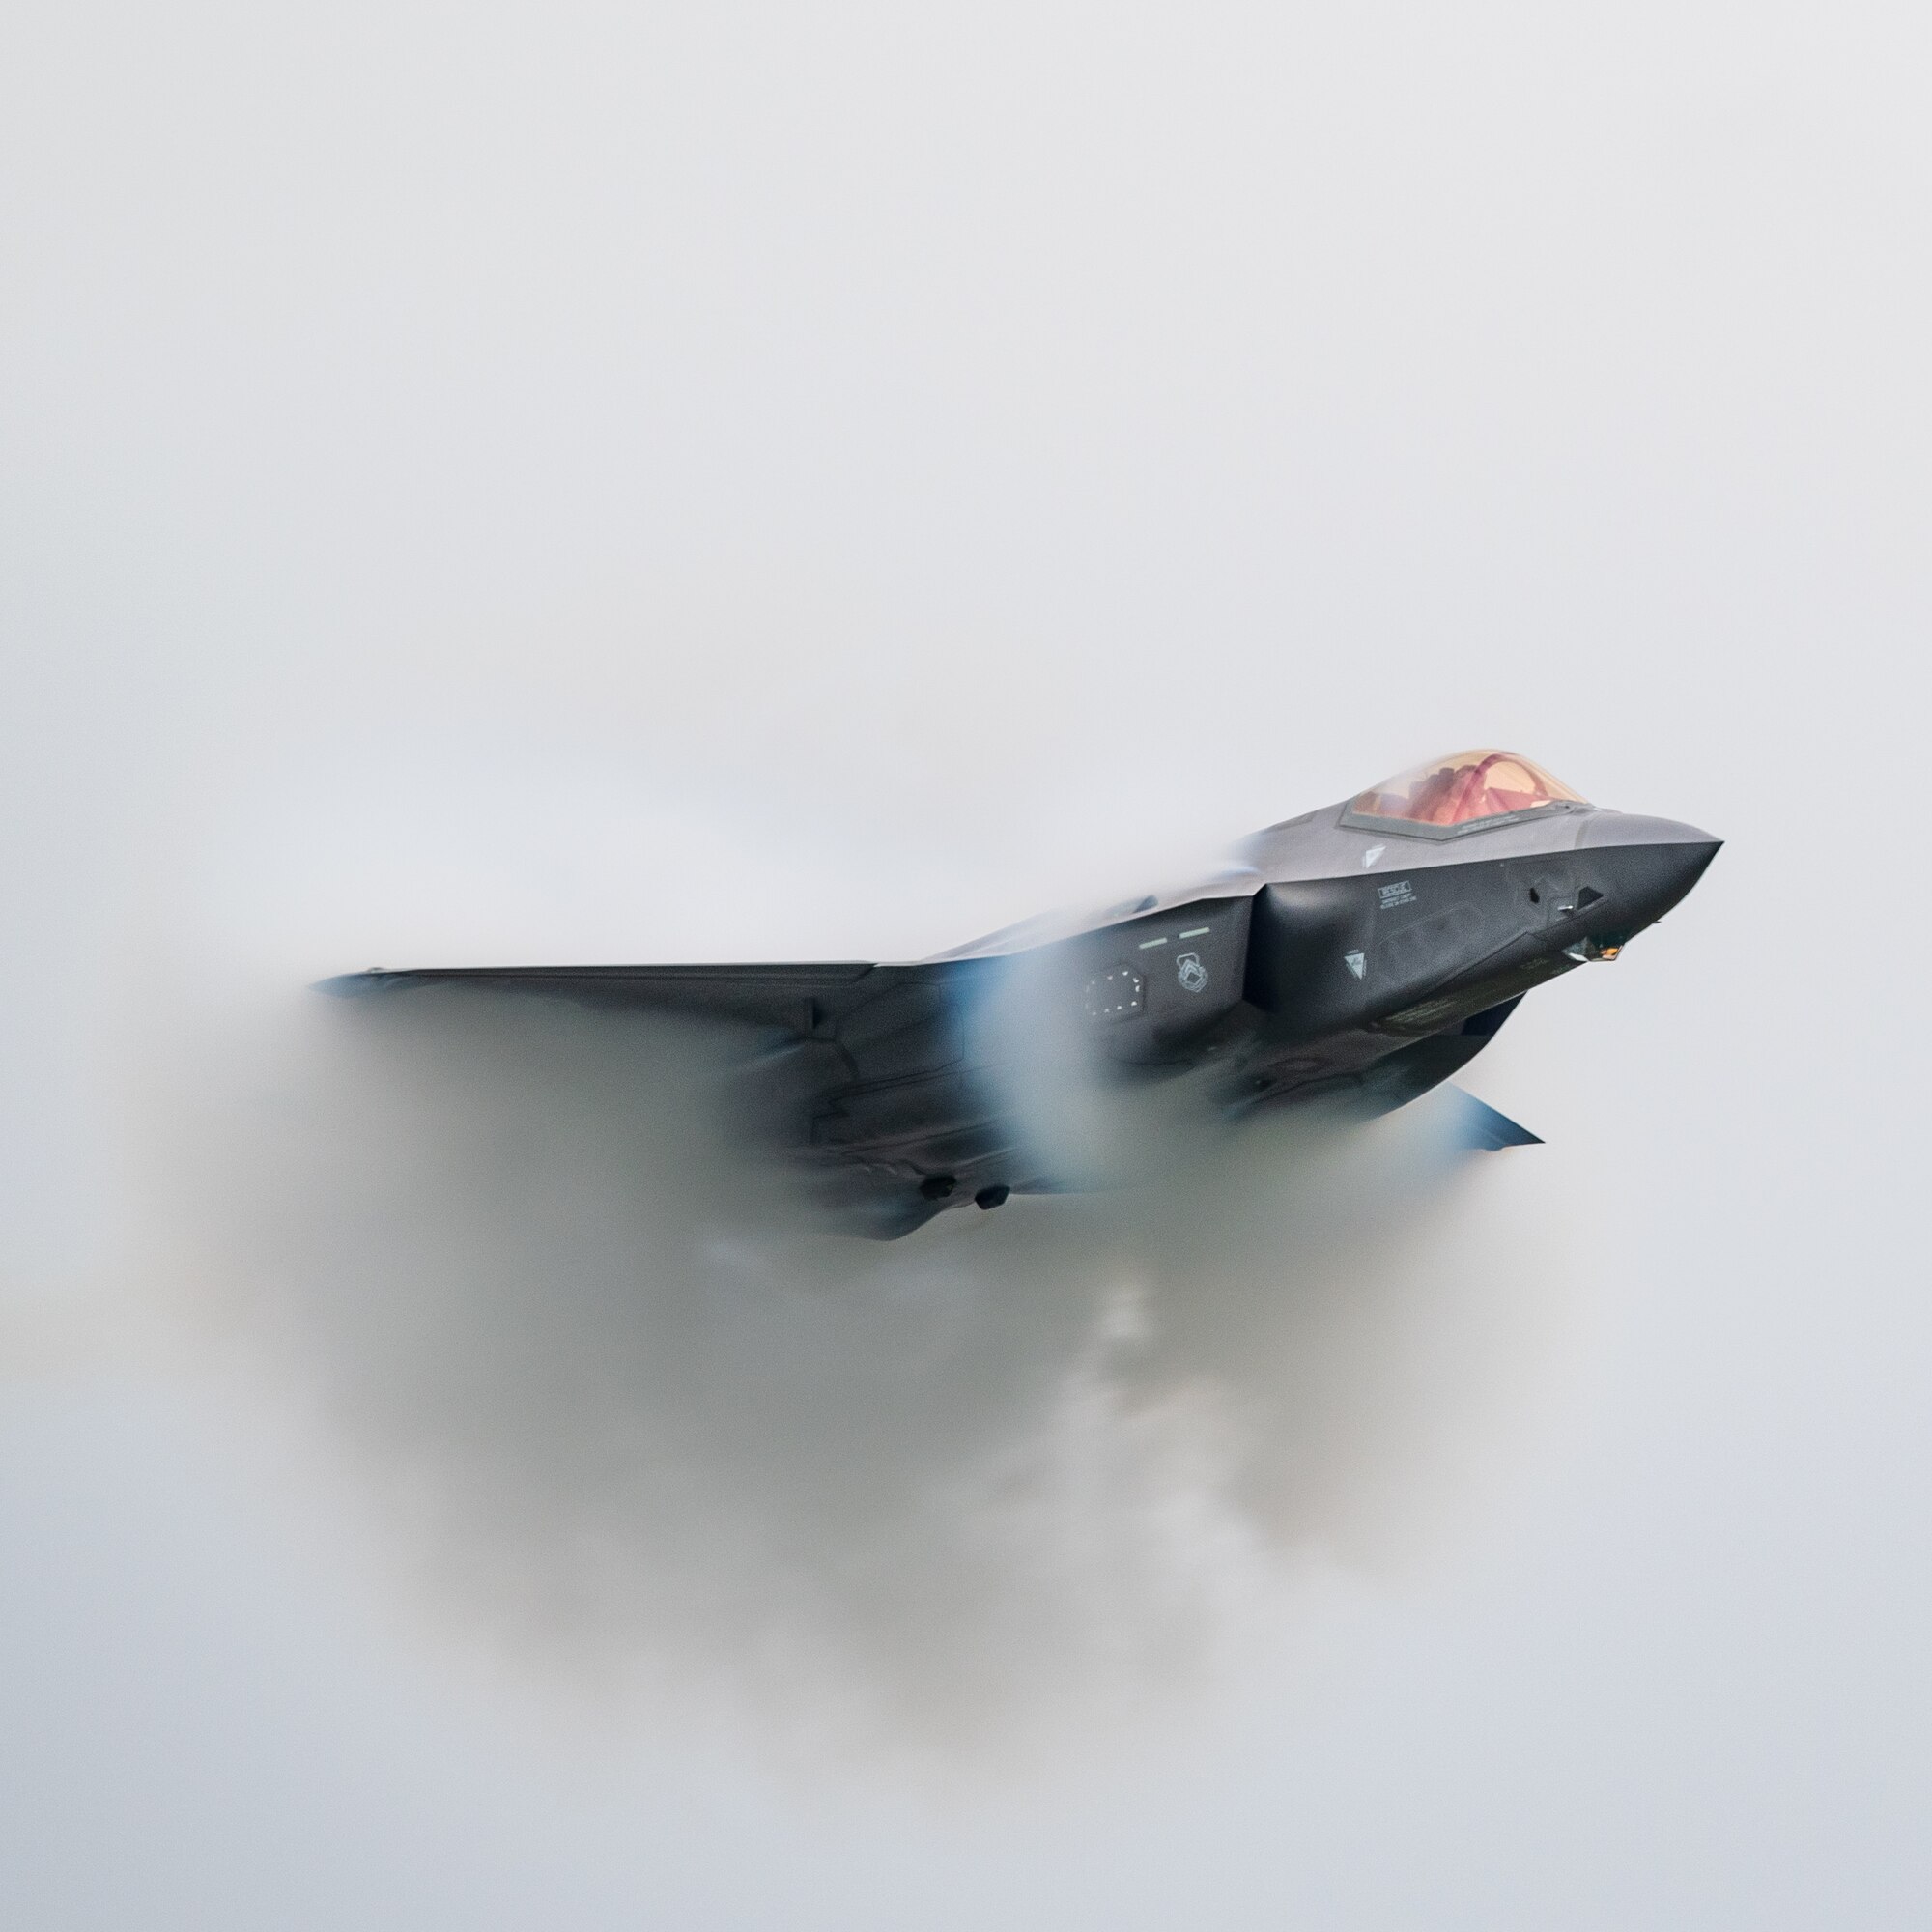 F-35 Lightning II demonstration team pilot and commander, performs aerial maneuvers